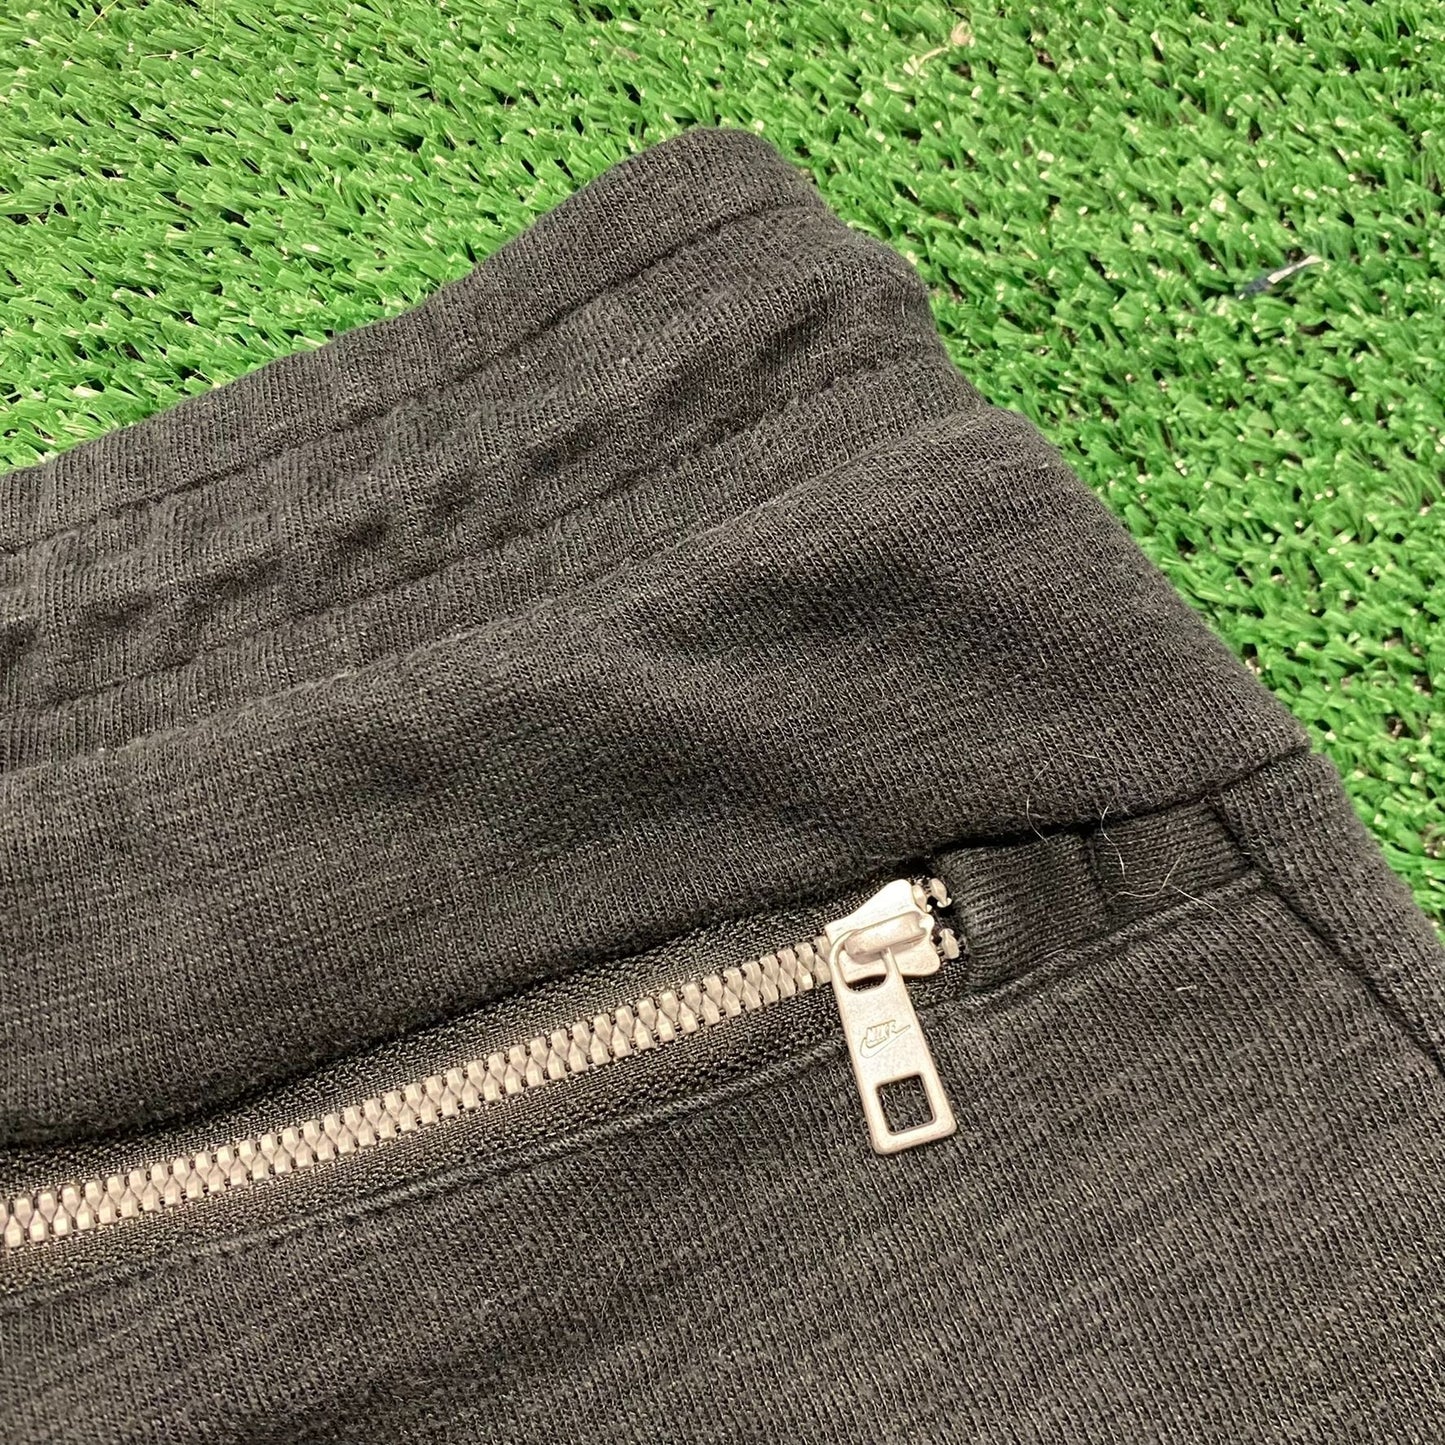 Nike Basic Essential Vintage Sweat Shorts